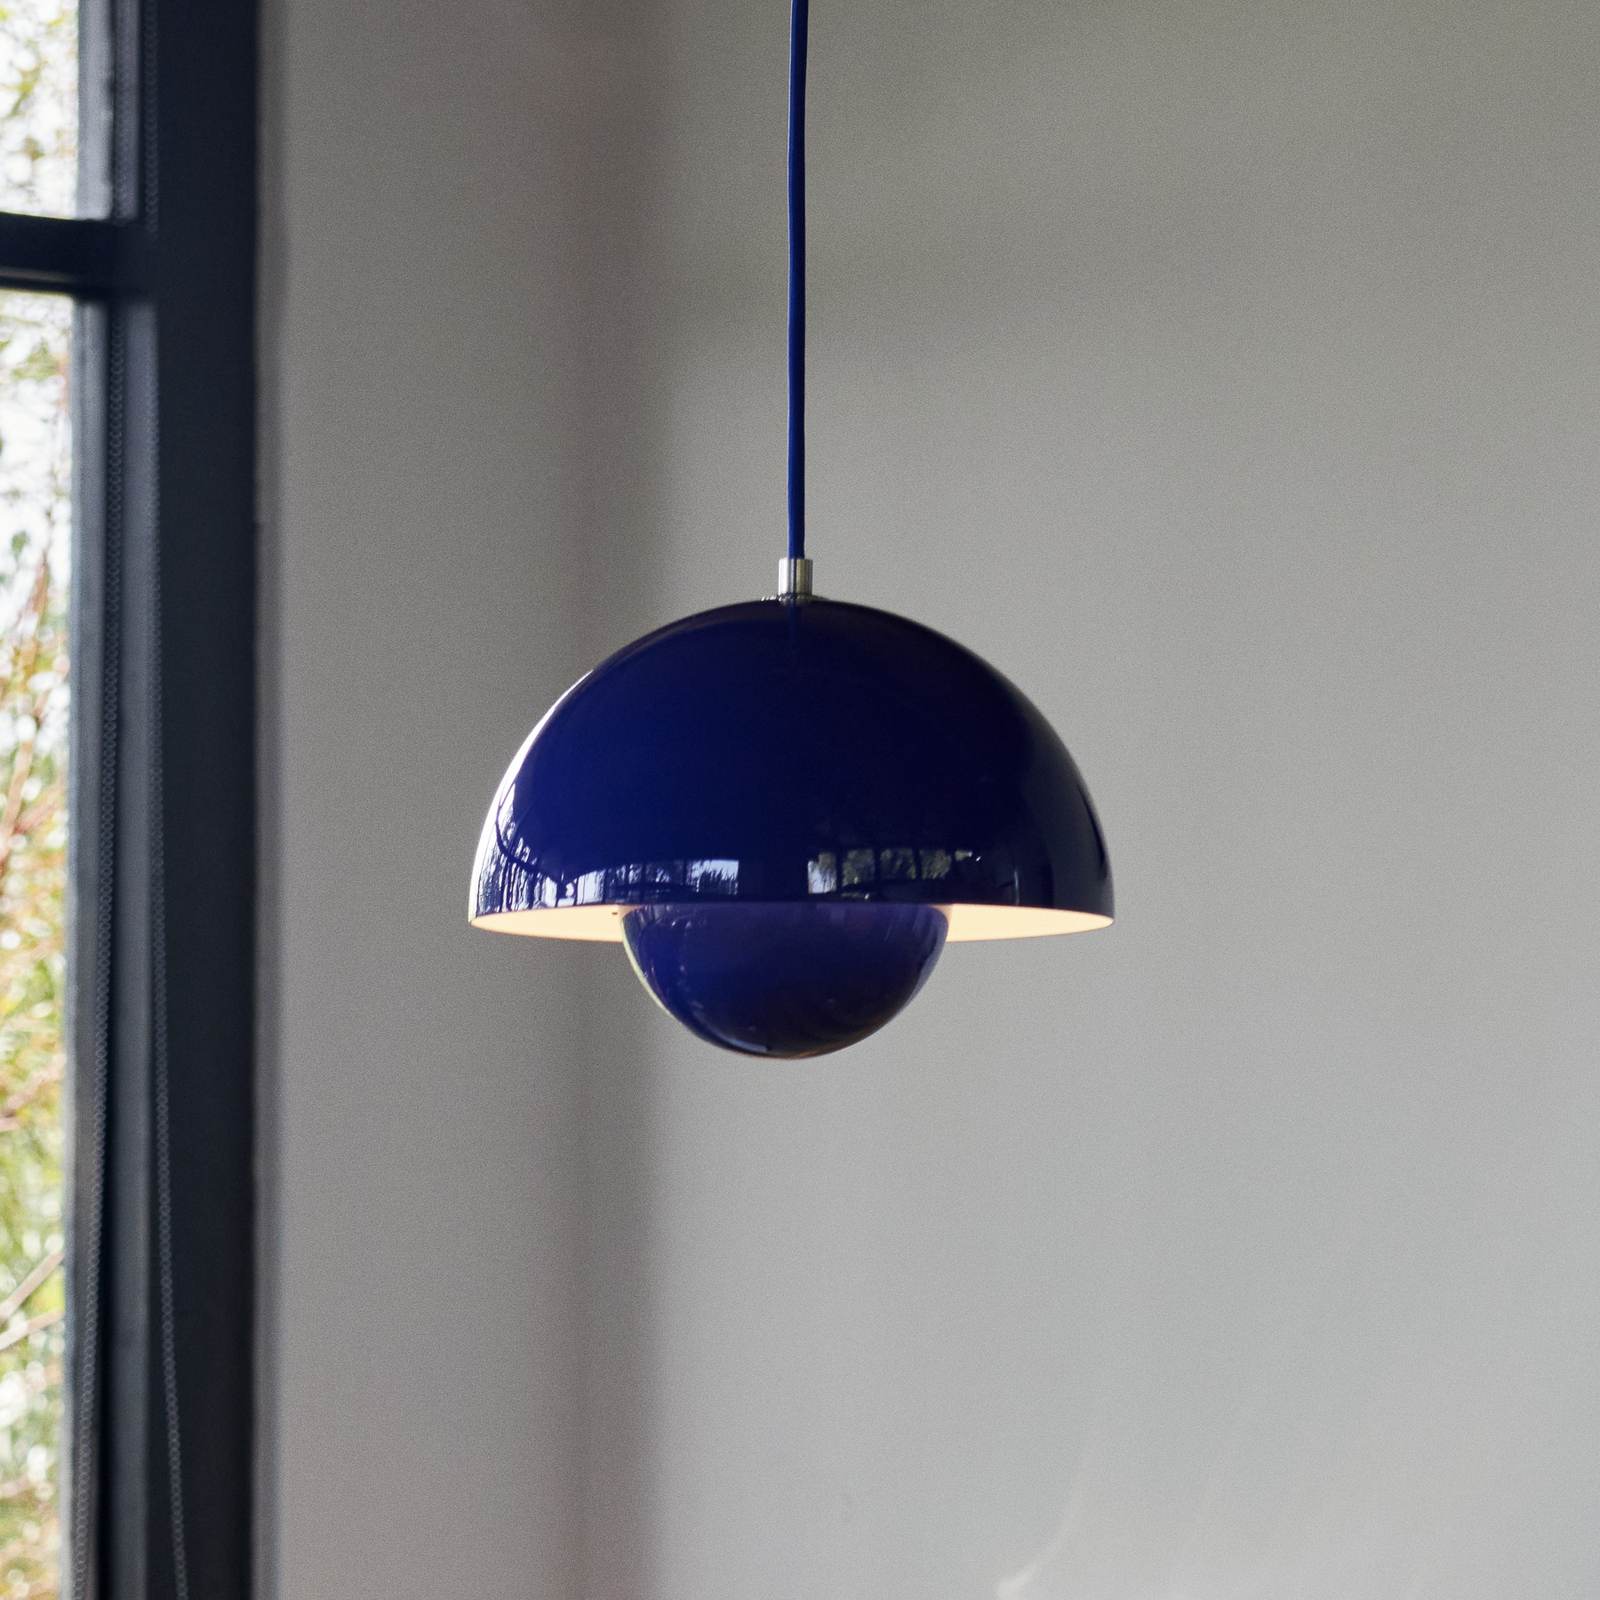 &Tradition Flowerpot VP1 pendant light, Ø 23 cm, cobalt blue